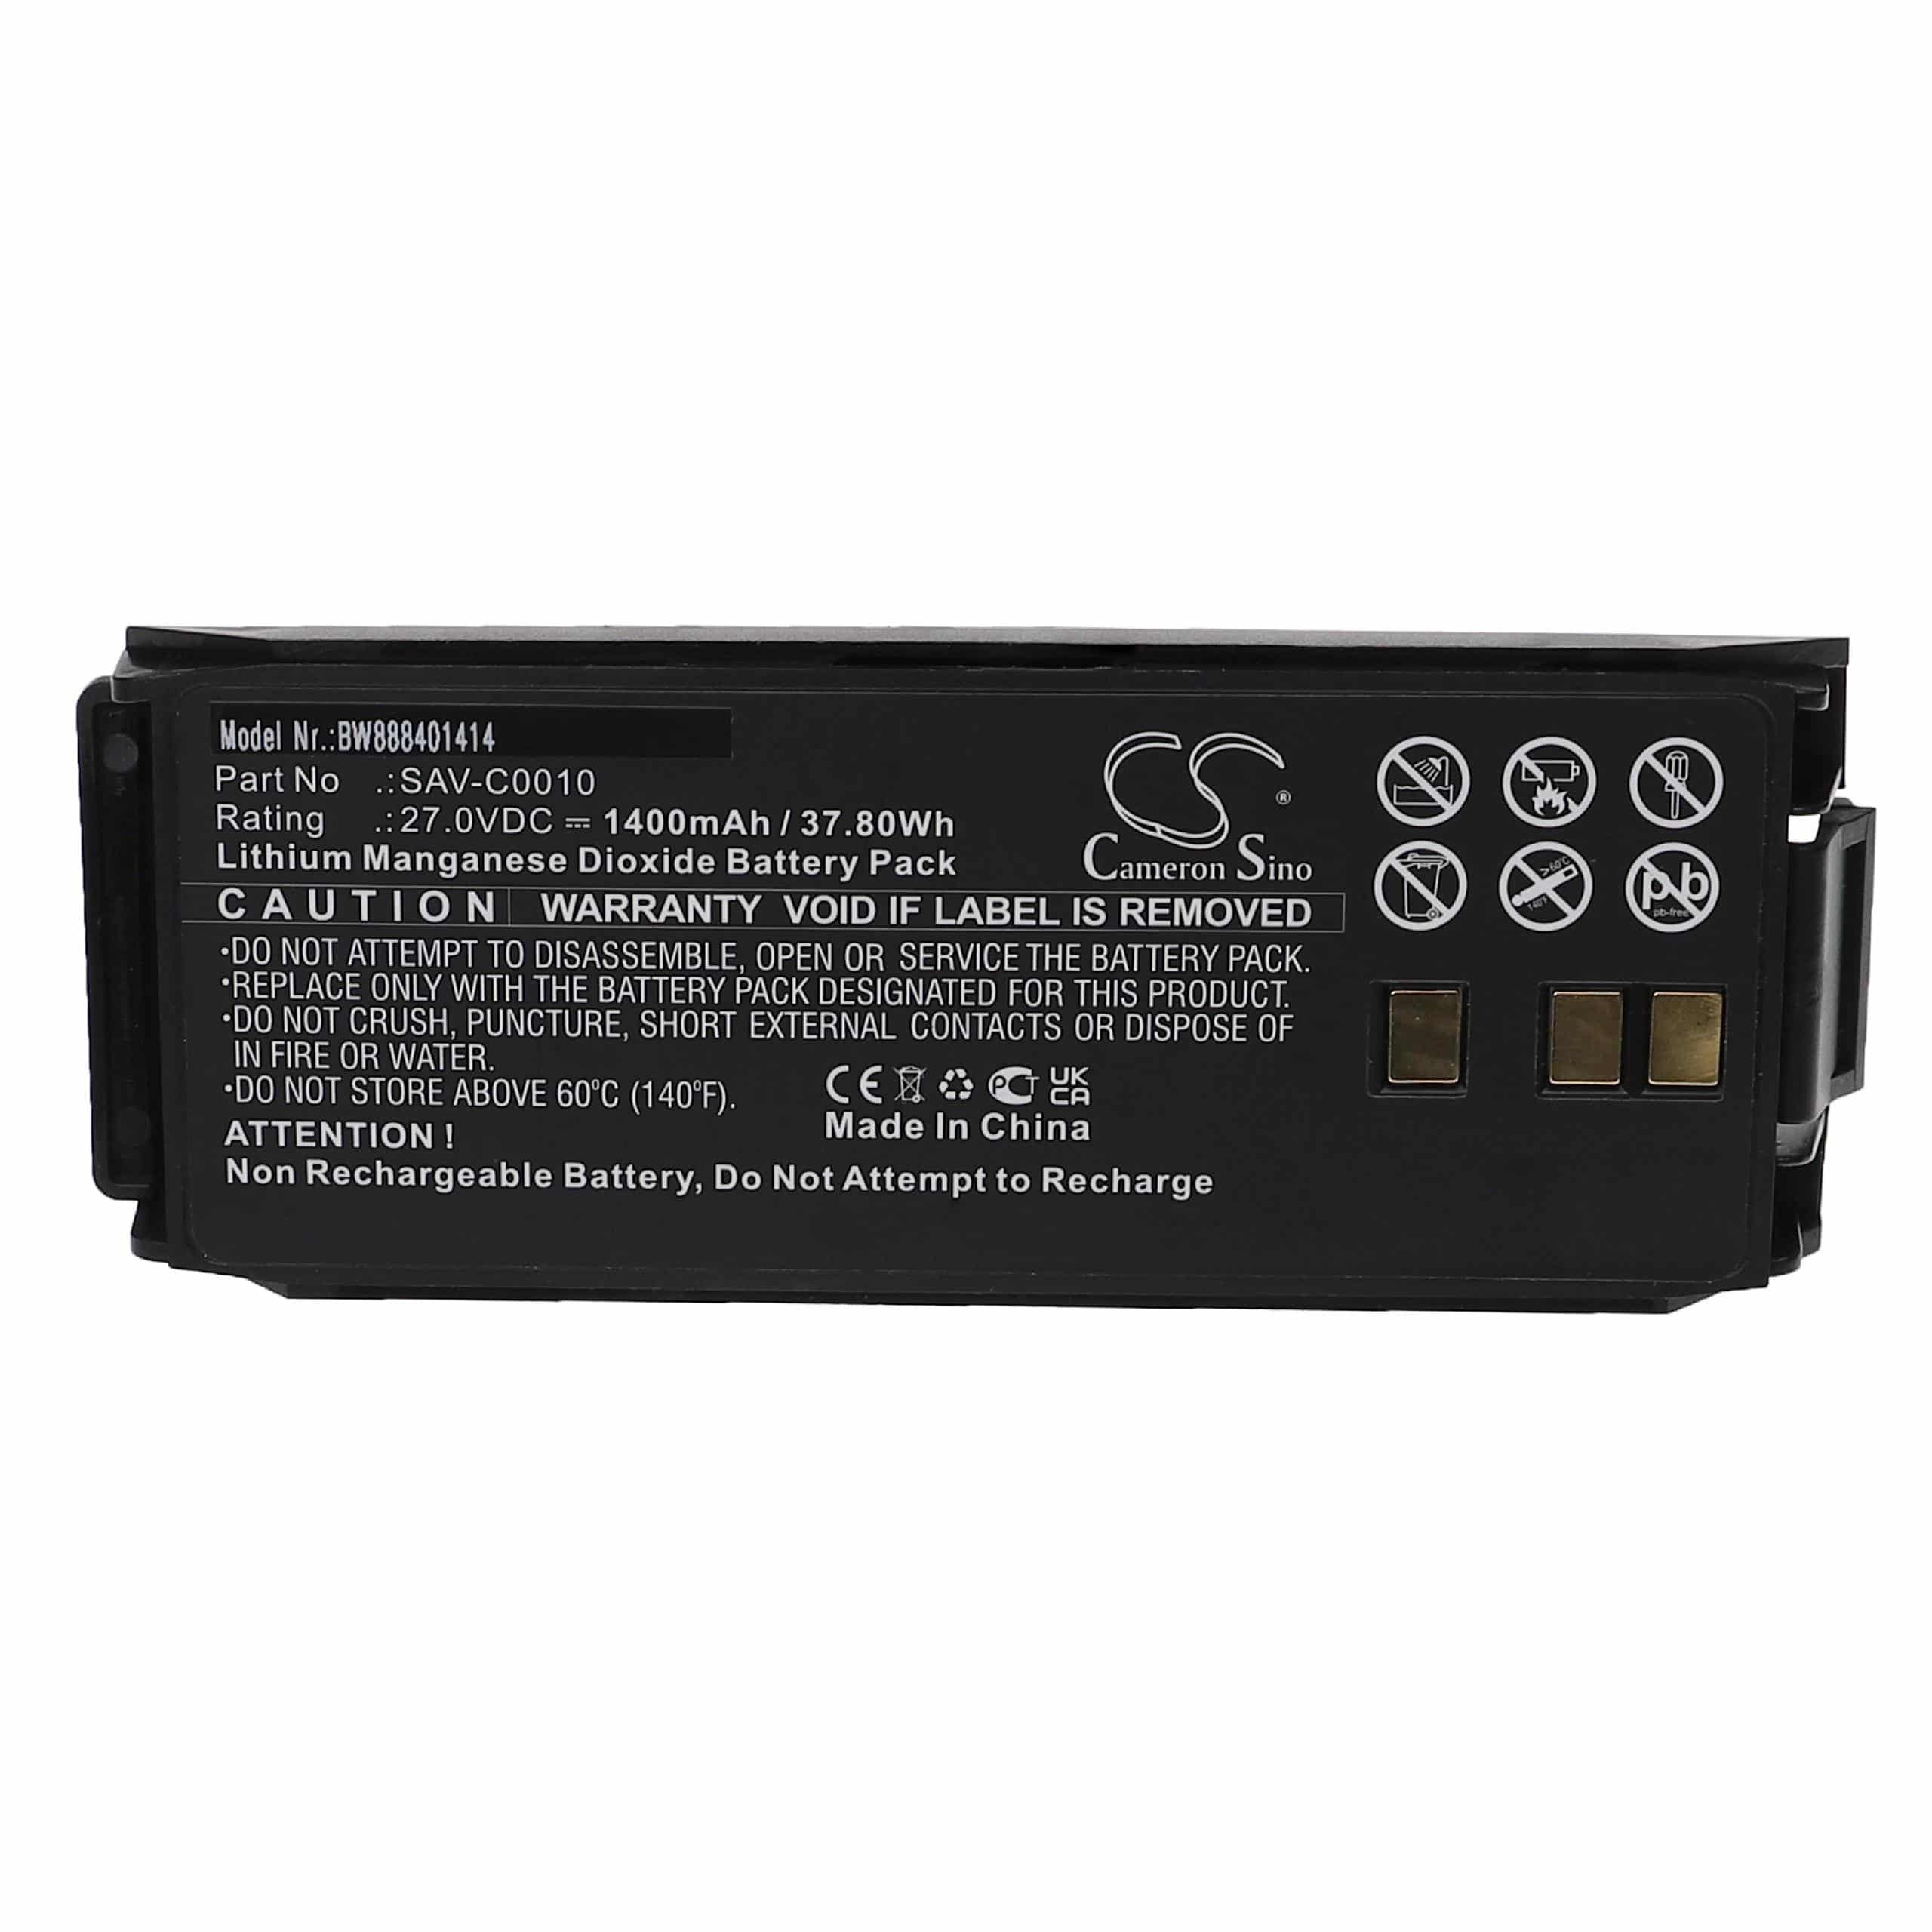 Batterie als Ersatz für Saver One SAV-C0010 - 1400mAh 27V Li-MnO2